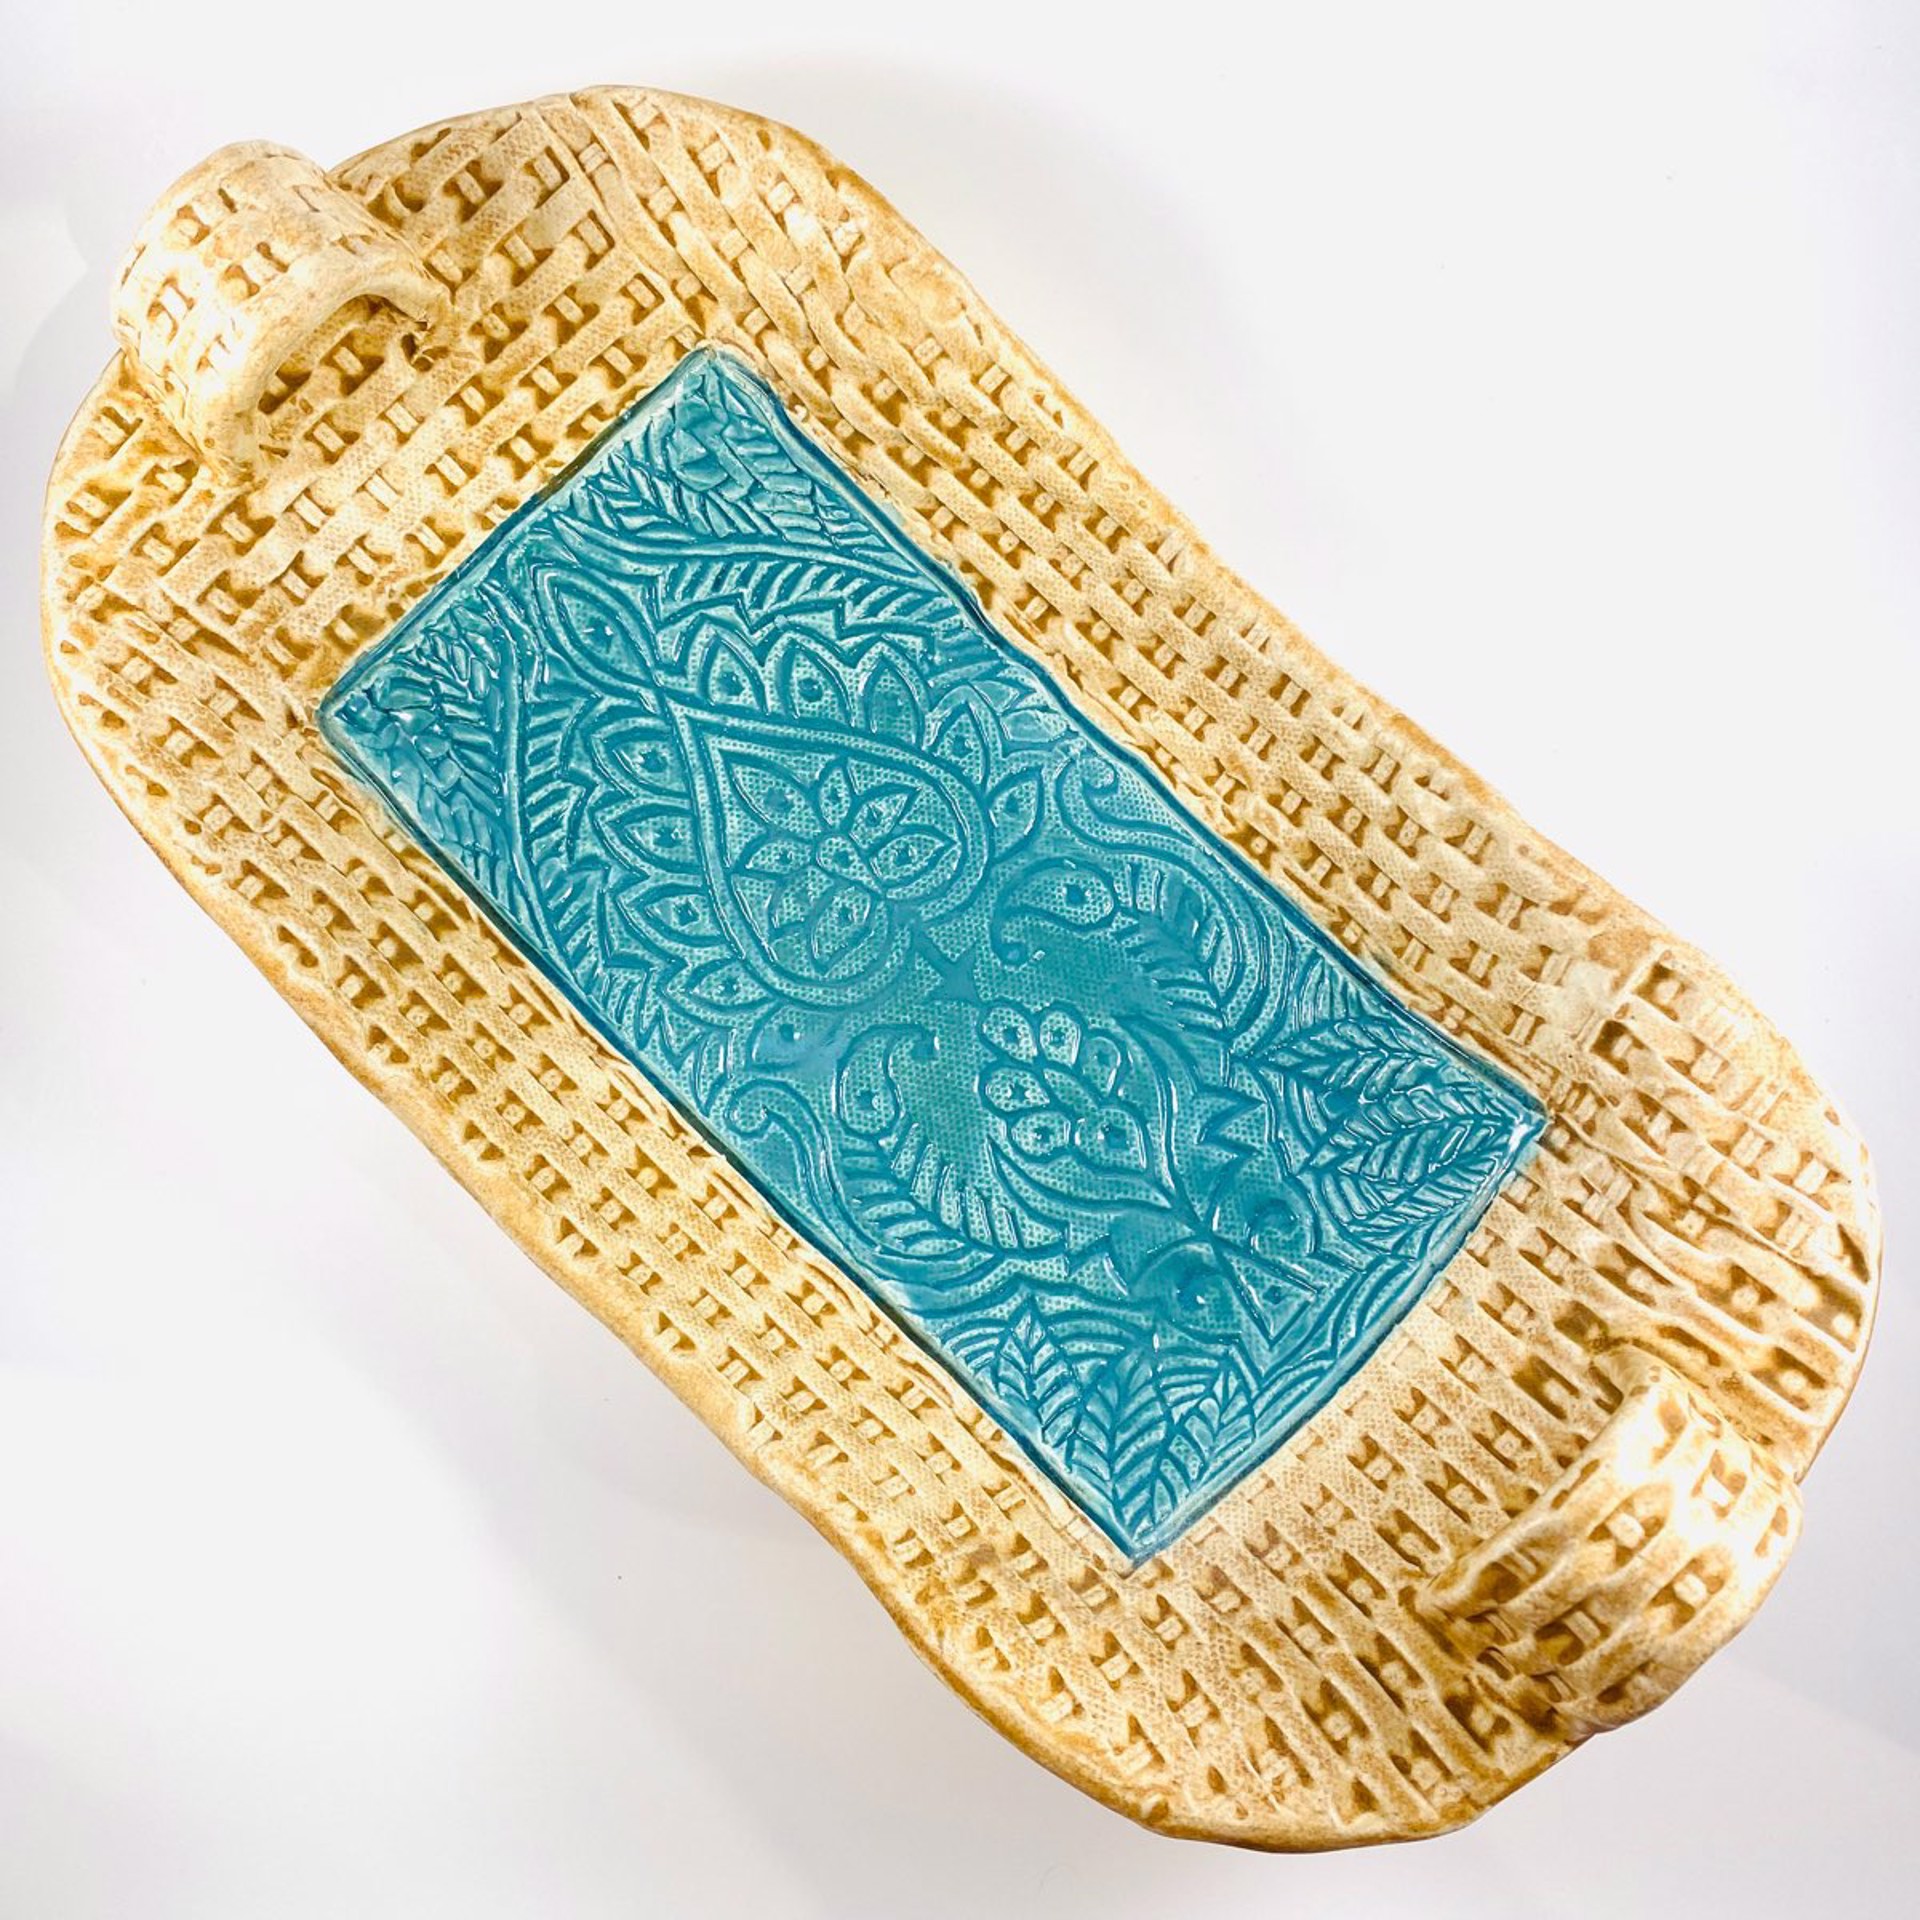 Bread “Basket” With Handles by Ilene Olanoff